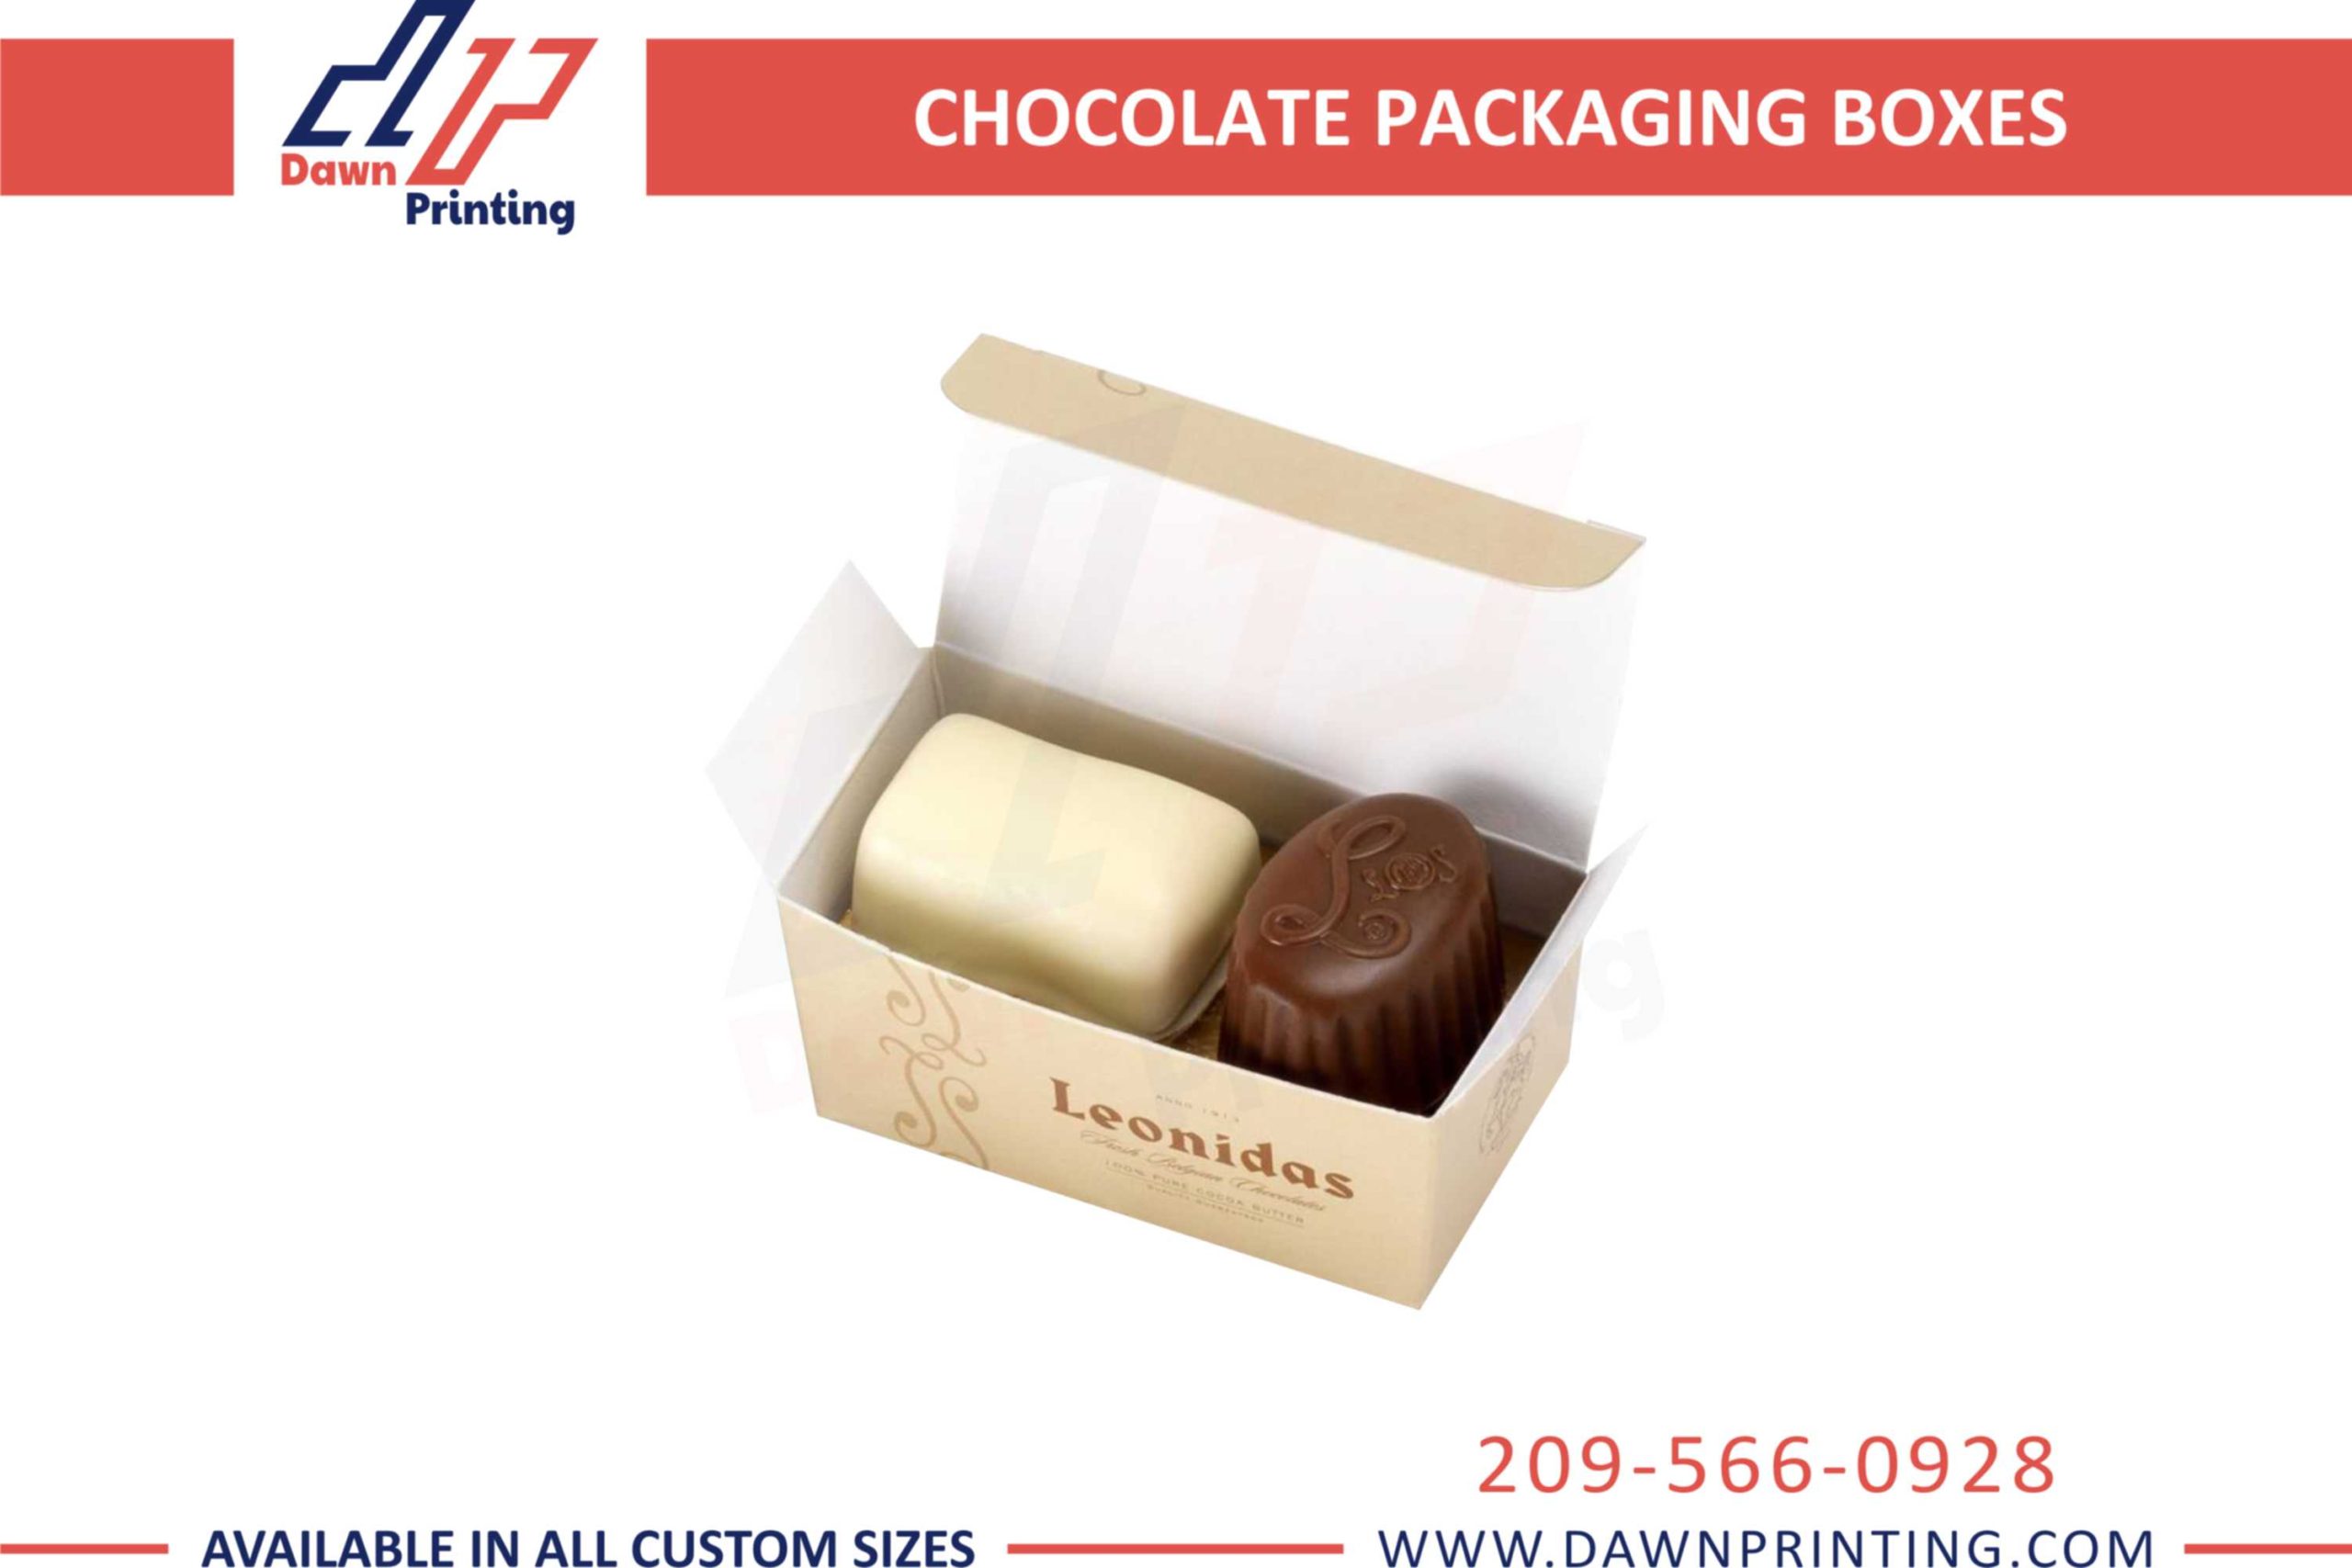 Custom Made Chocolate Packaging Boxes - Dawn Printing